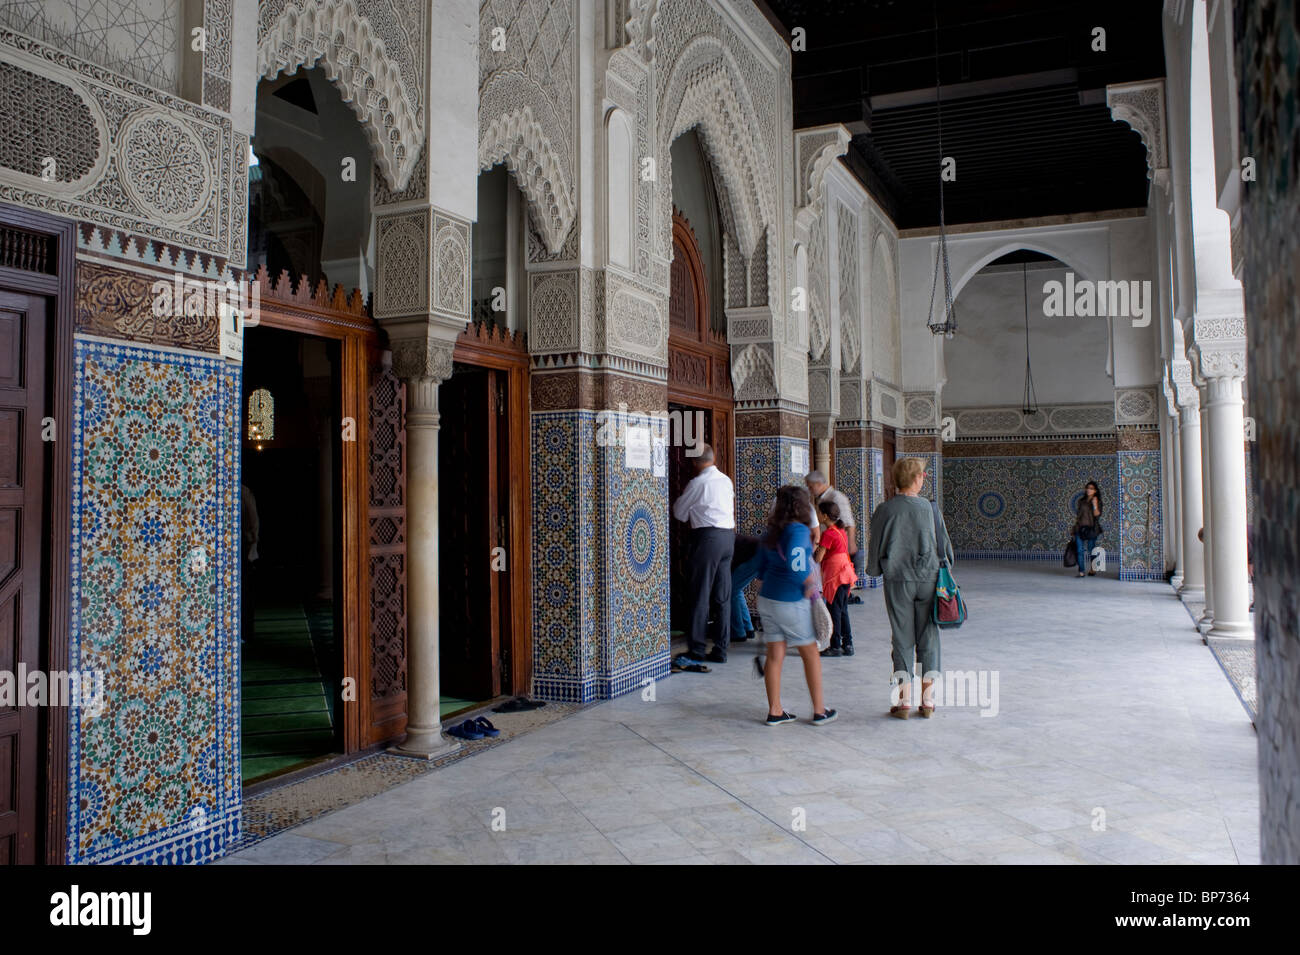 Paris, France, Religion, Small Group People, Women, Tourists visiting inside Grand Mosque, Building Hallway Outside Prayer Room, art islamique MOSQUÉE PARIS Stock Photo